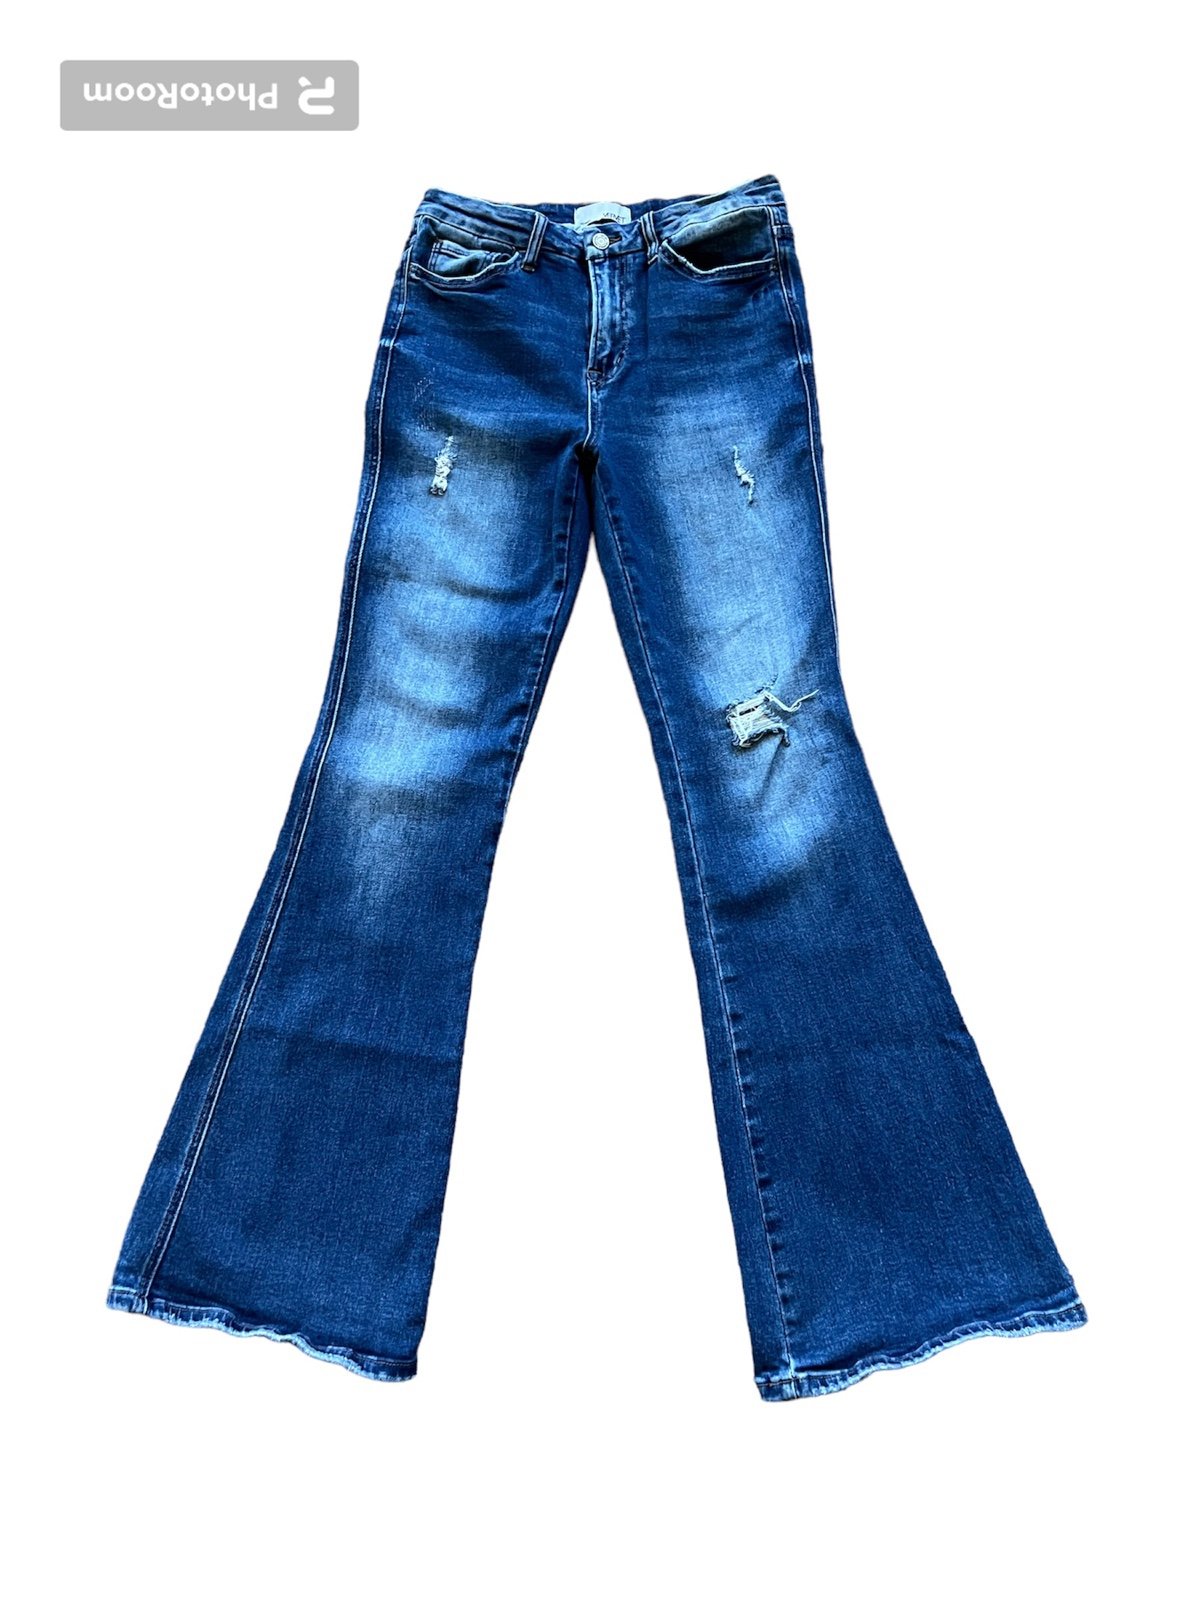 Custom Vervet jeans size 29 OZIWv36lm Buying Cheap